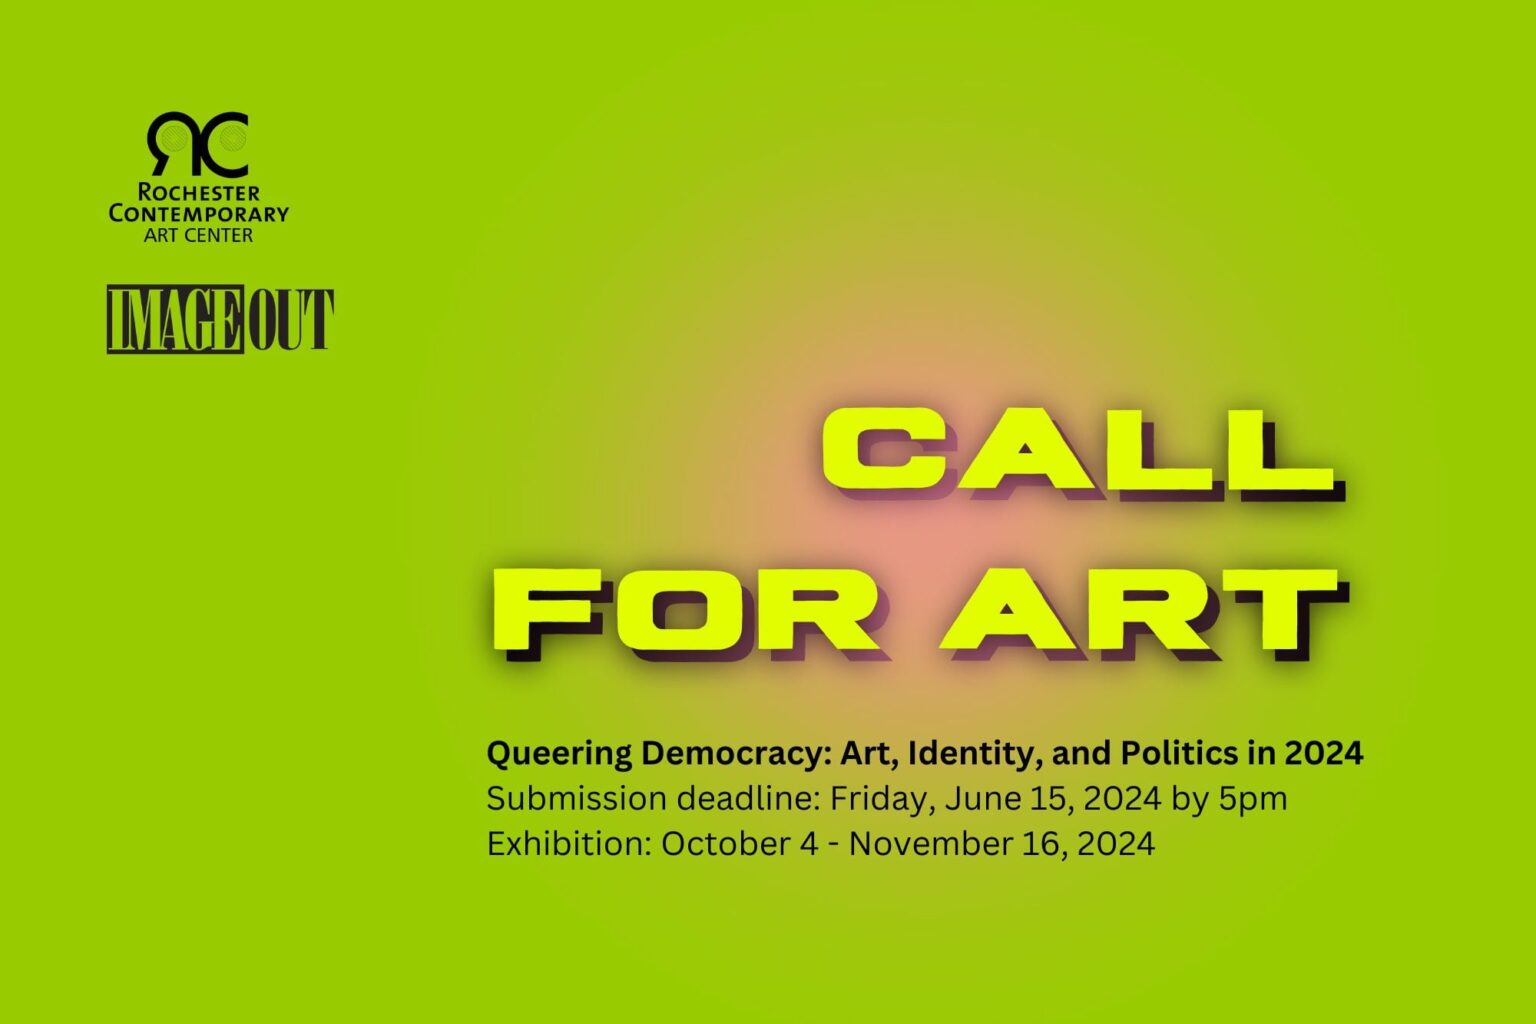 CALL FOR ART Queering Democracy Rochester Contemporary Art Center